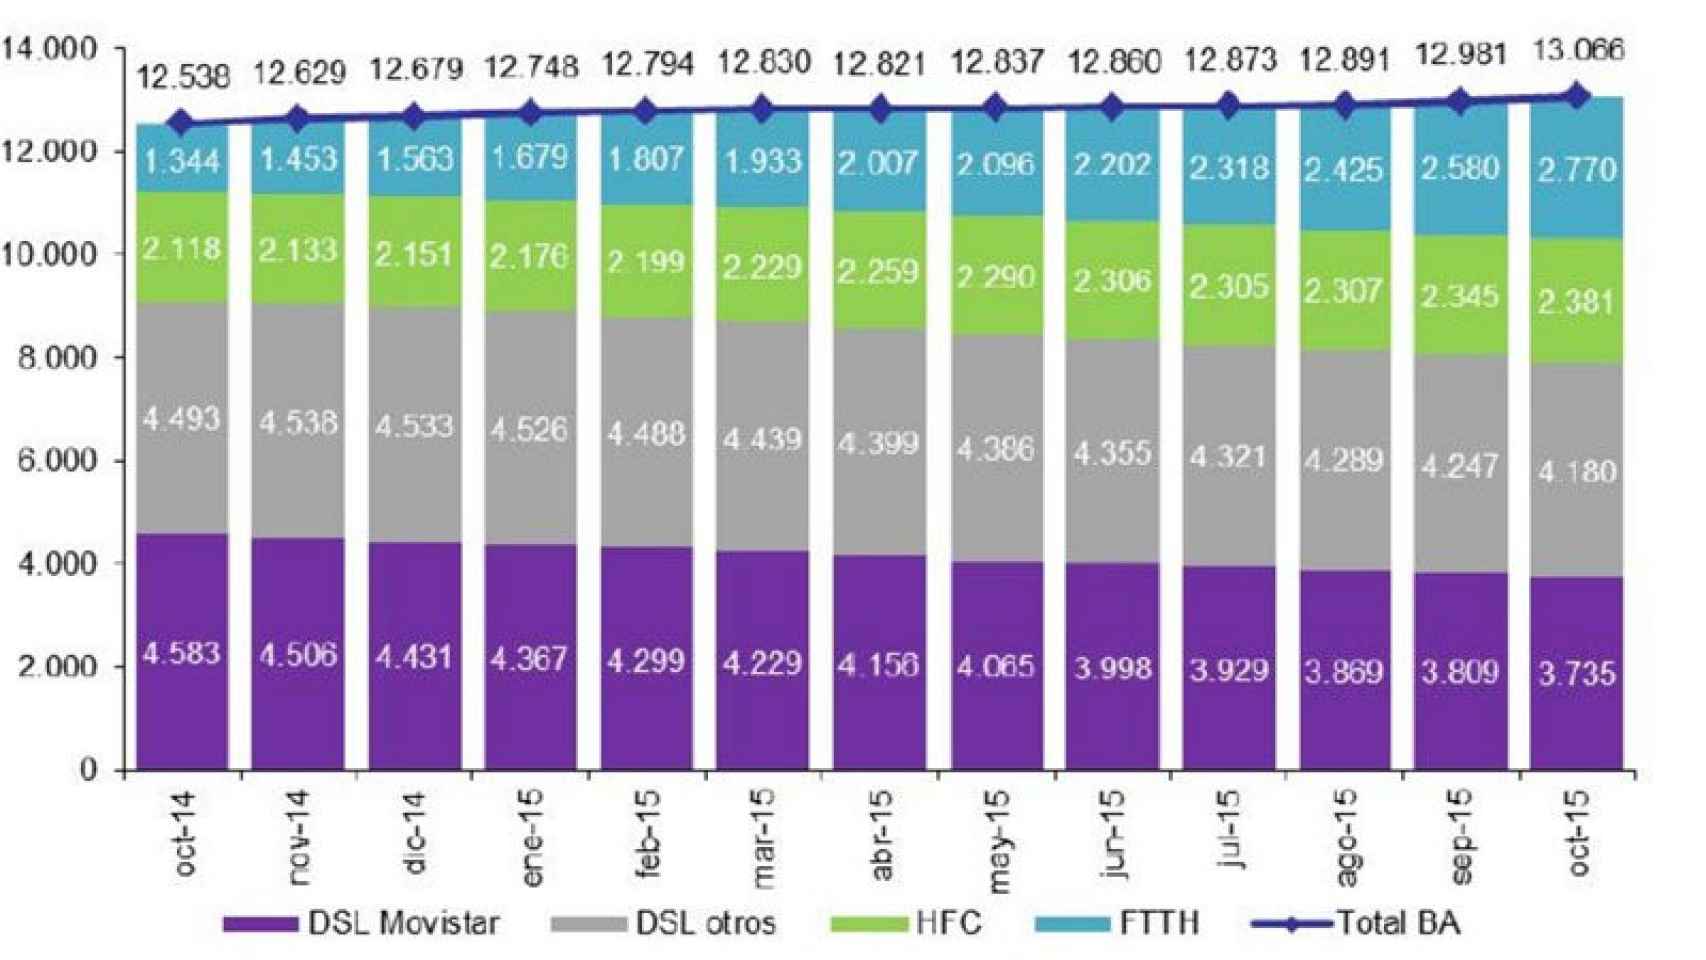 Evolución del número de líneas de banda ancha en España (en miles de unidades)